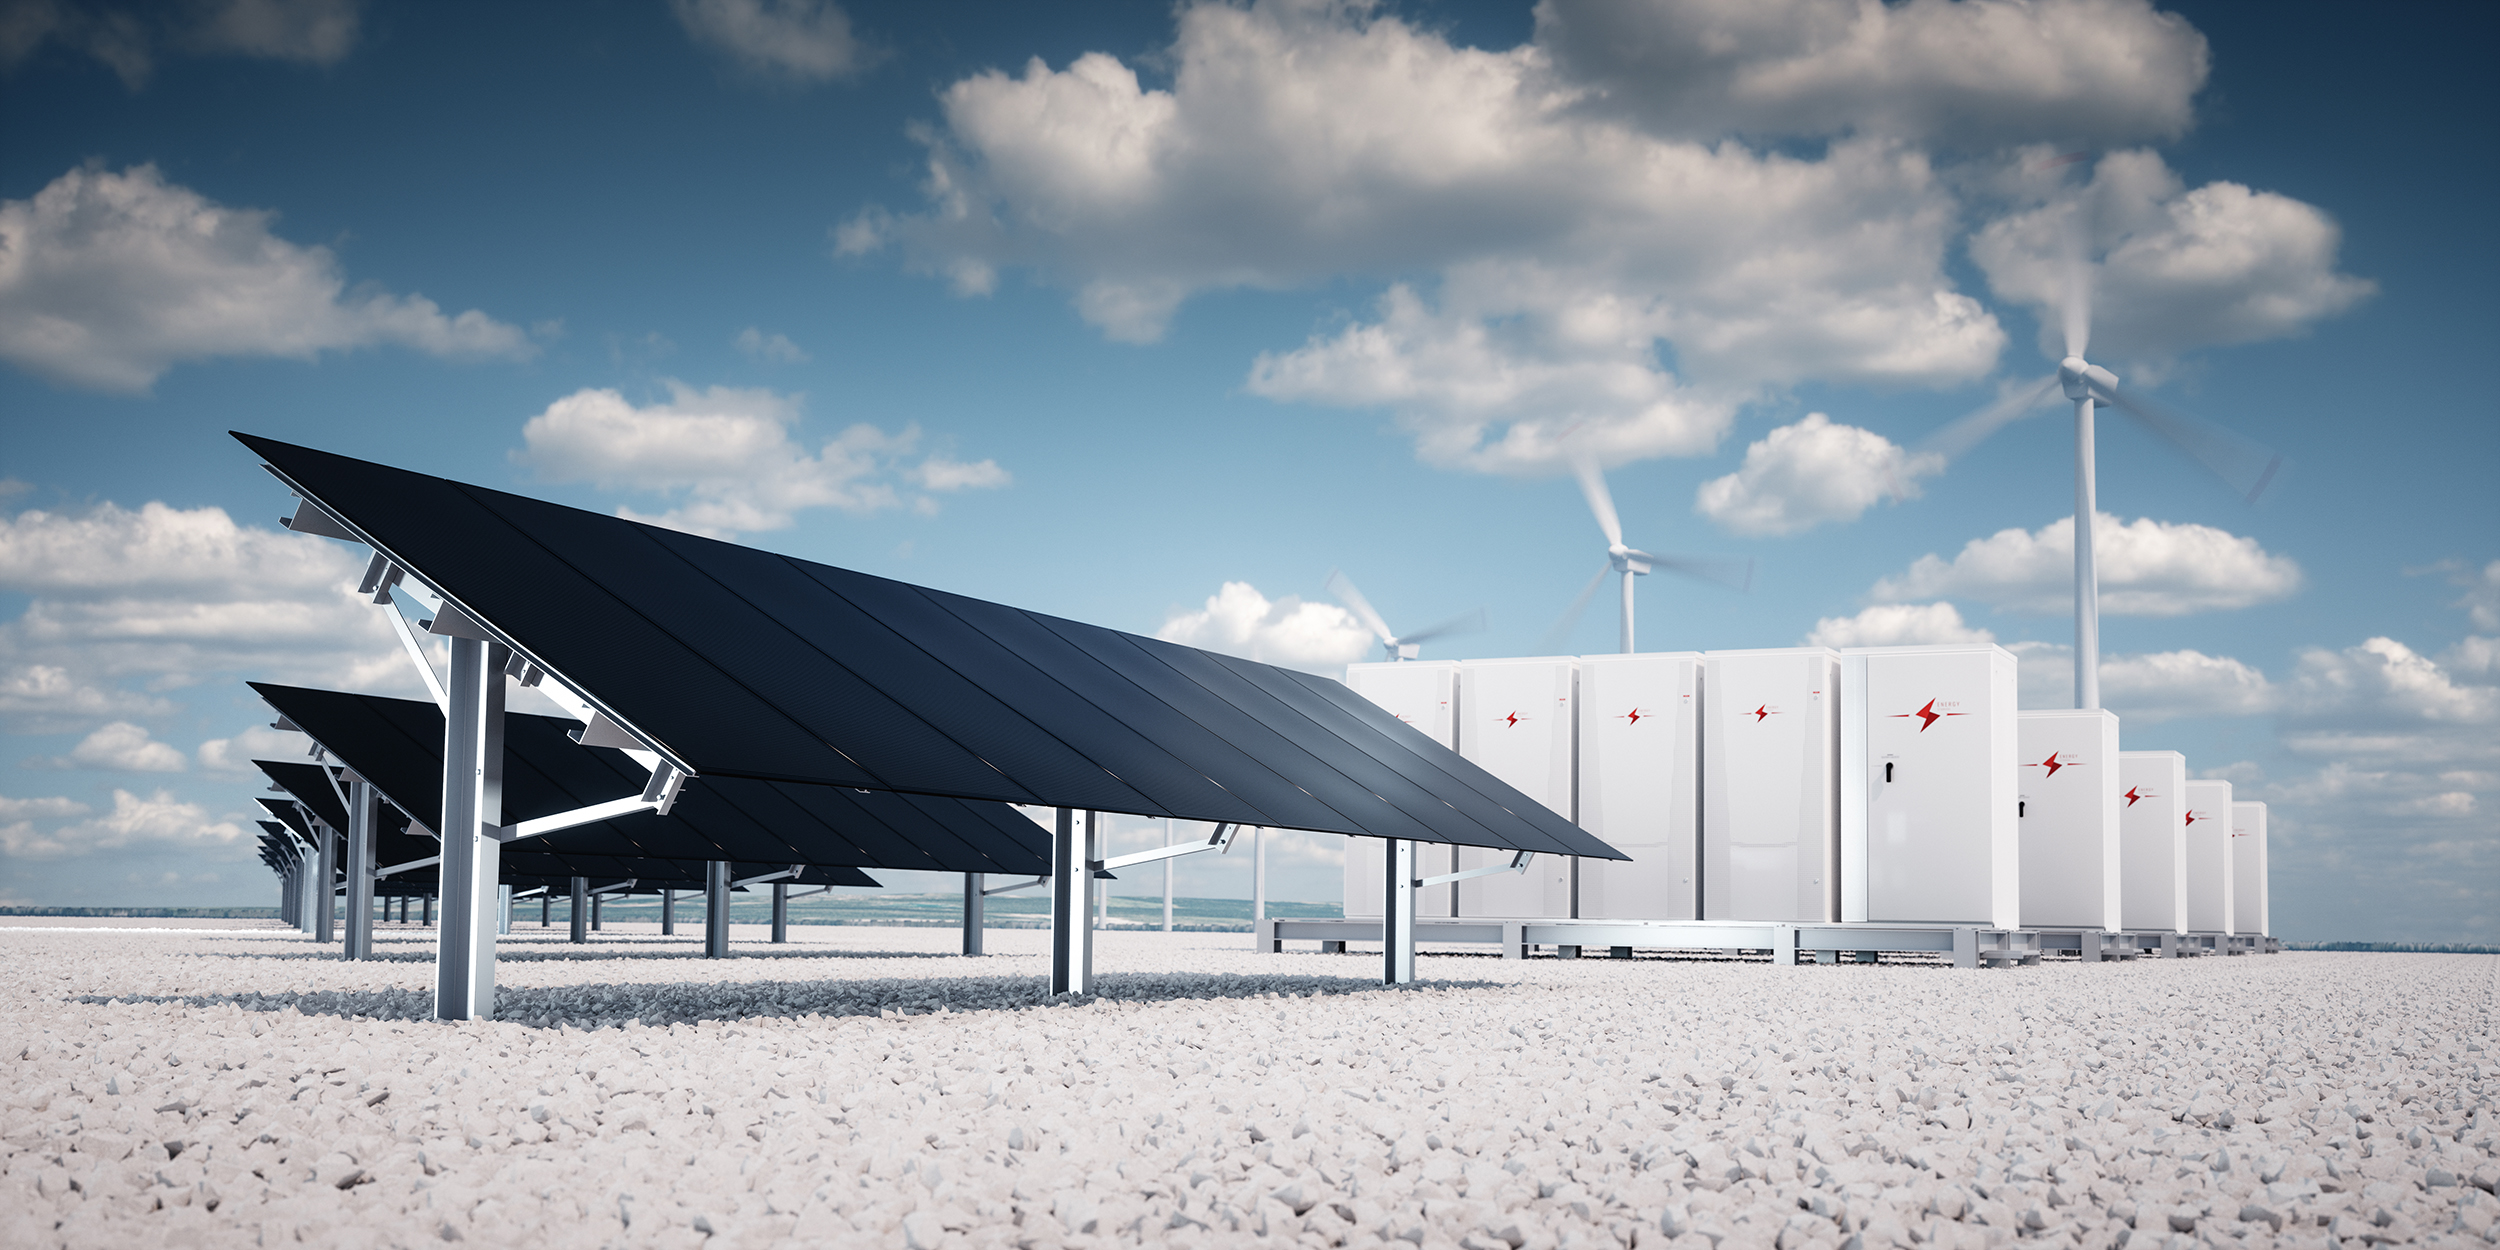 Photorealistic futuristic concept of renewable energy storage.